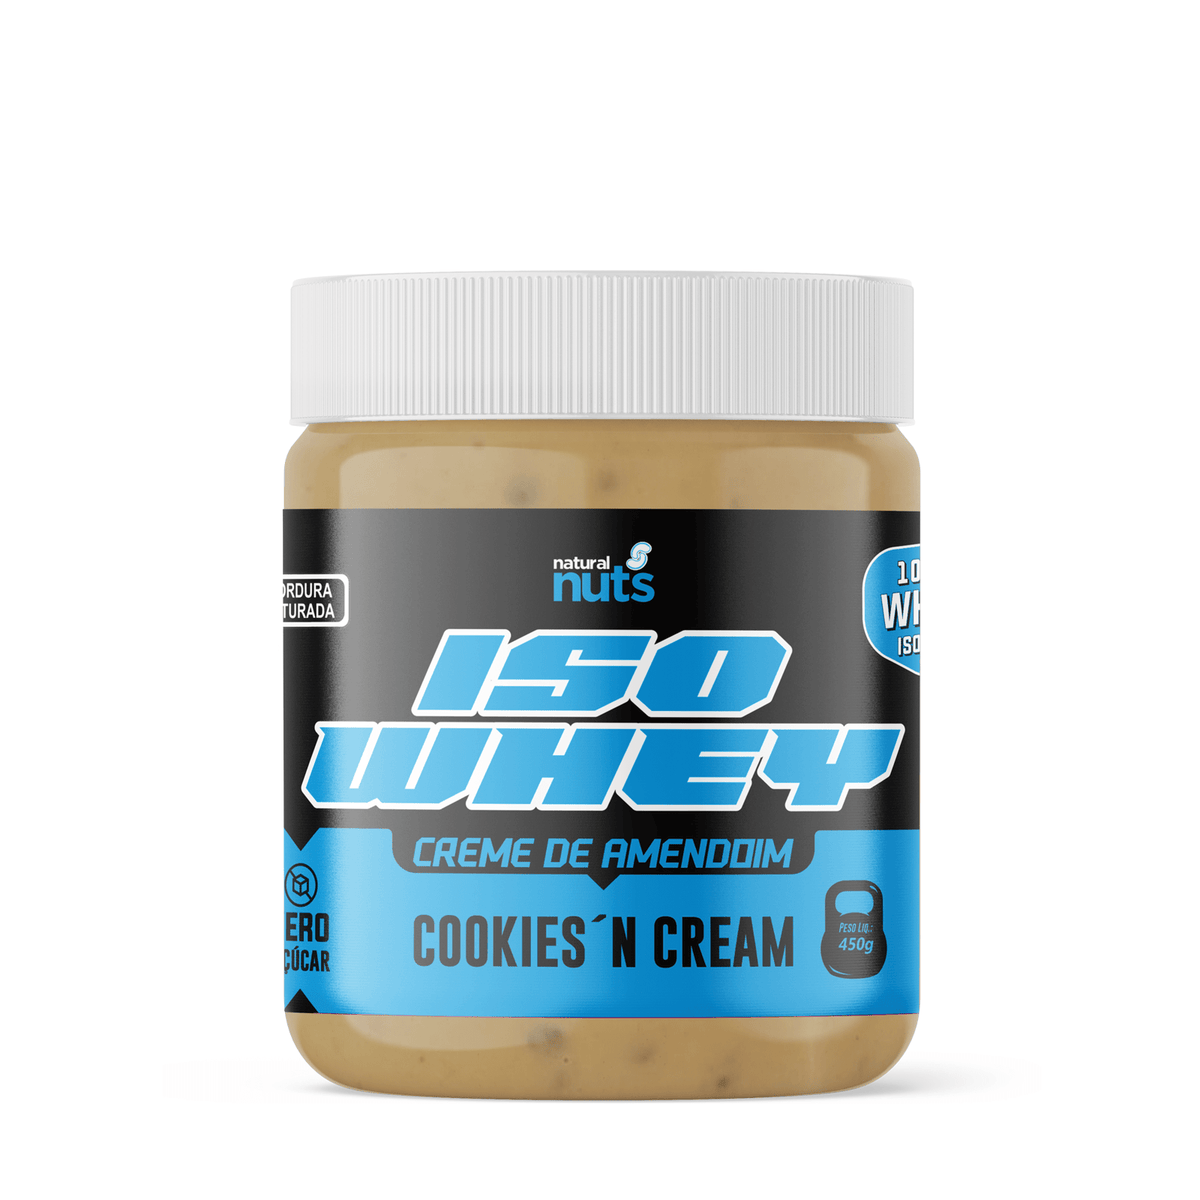 Creme de Amendoim Cookies N' Cream 100% Whey Isolado | Zero Açucar - Natural Nuts